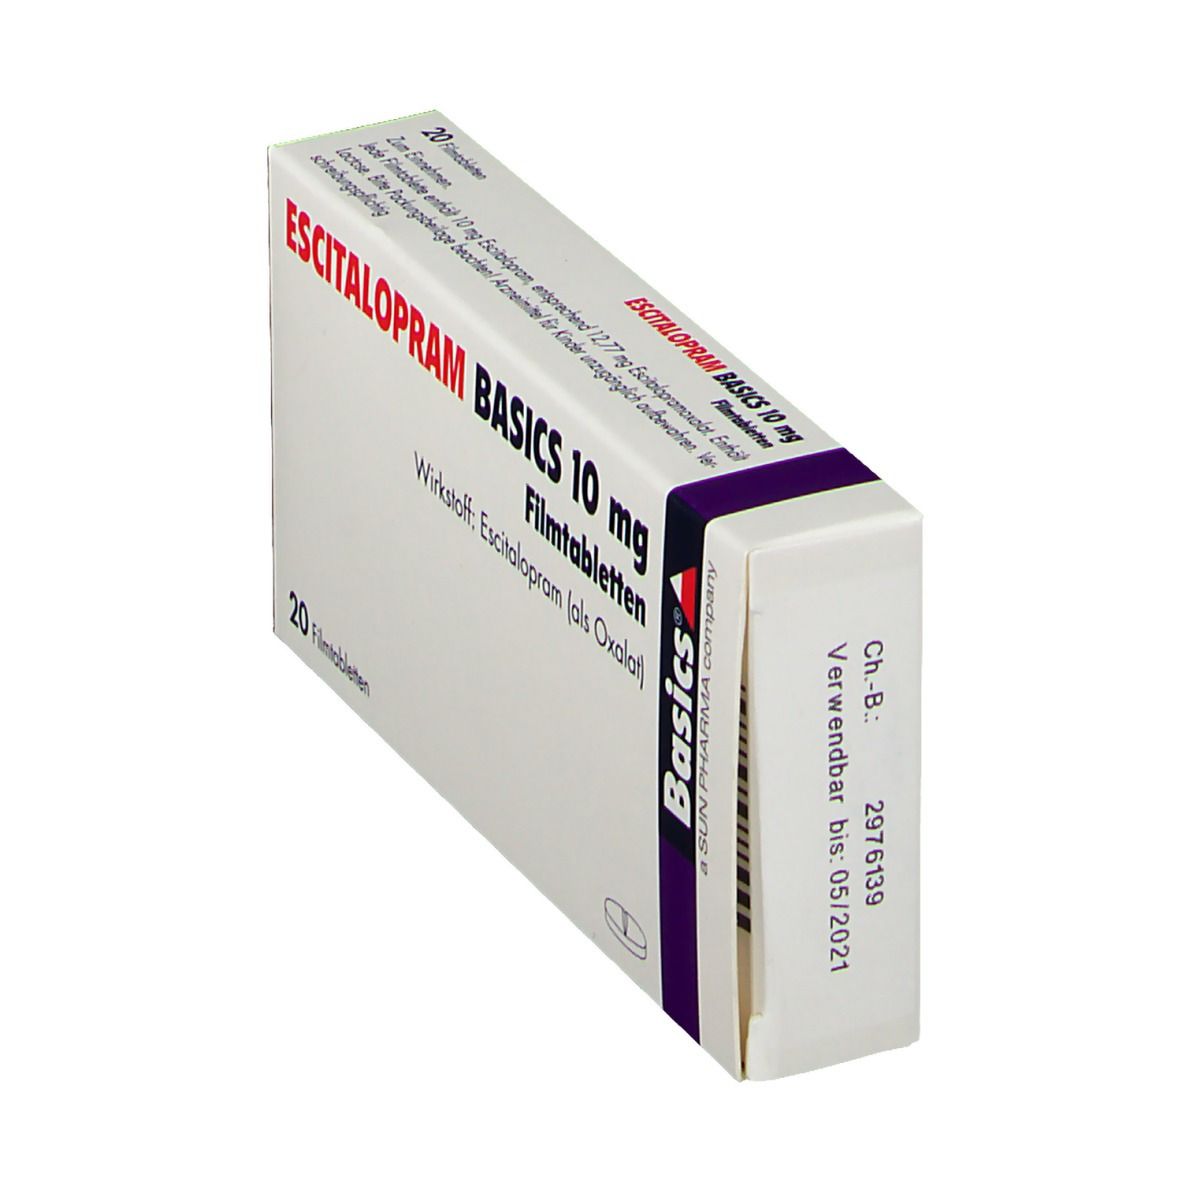 ESCITALOPRAM BASICS 10 mg